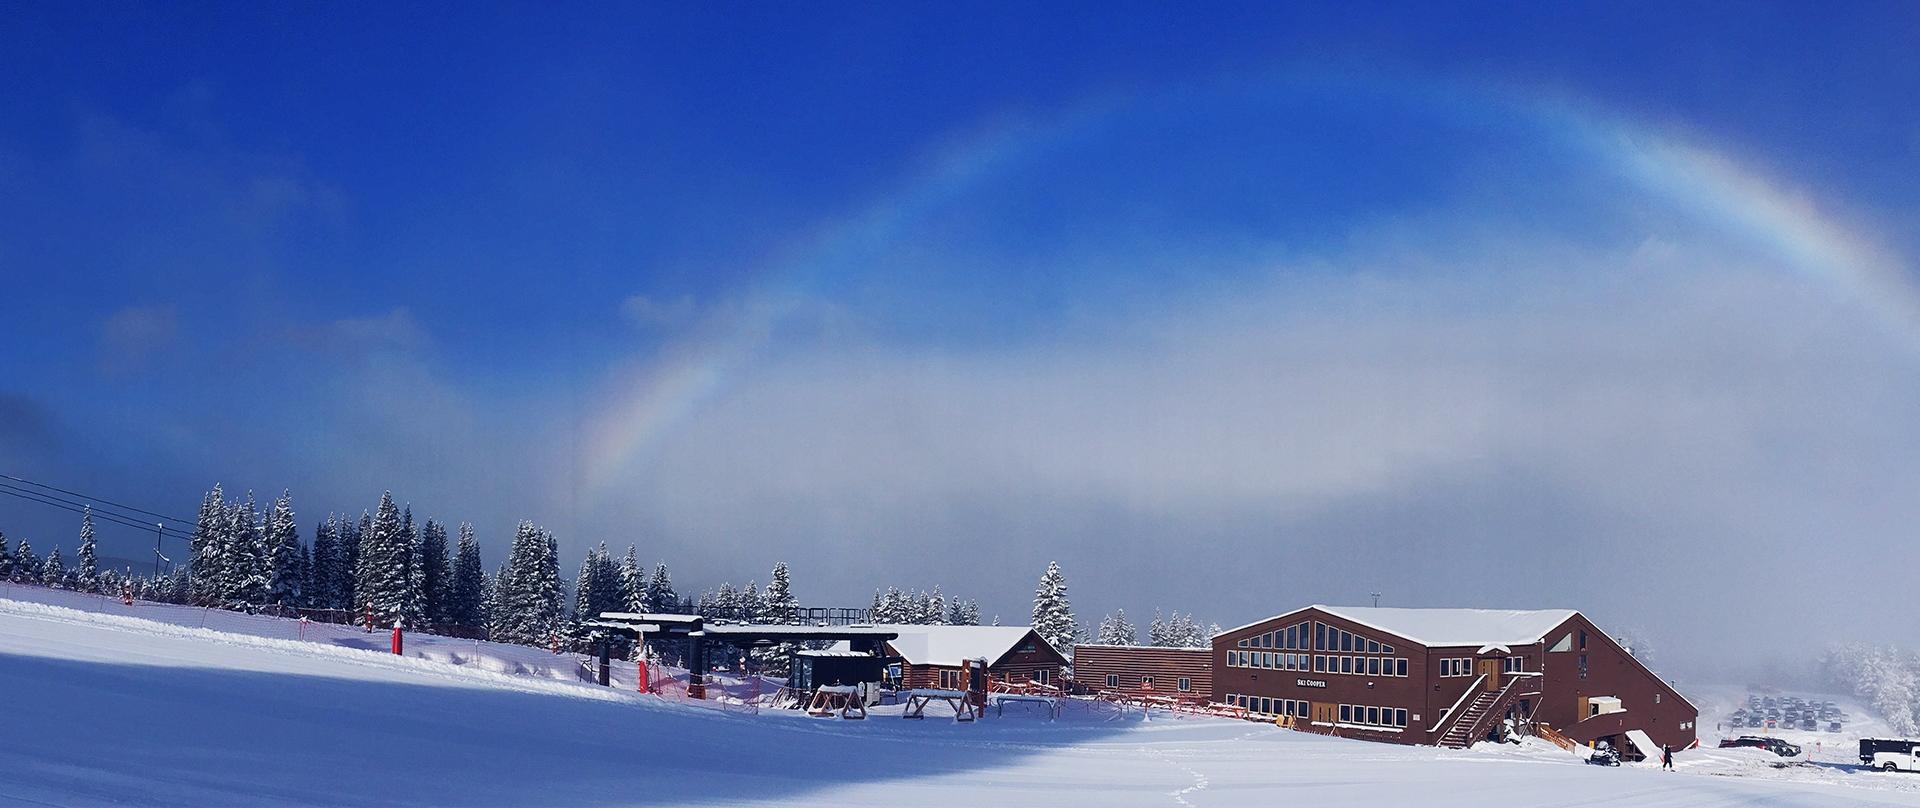 Rainbow over the lodge